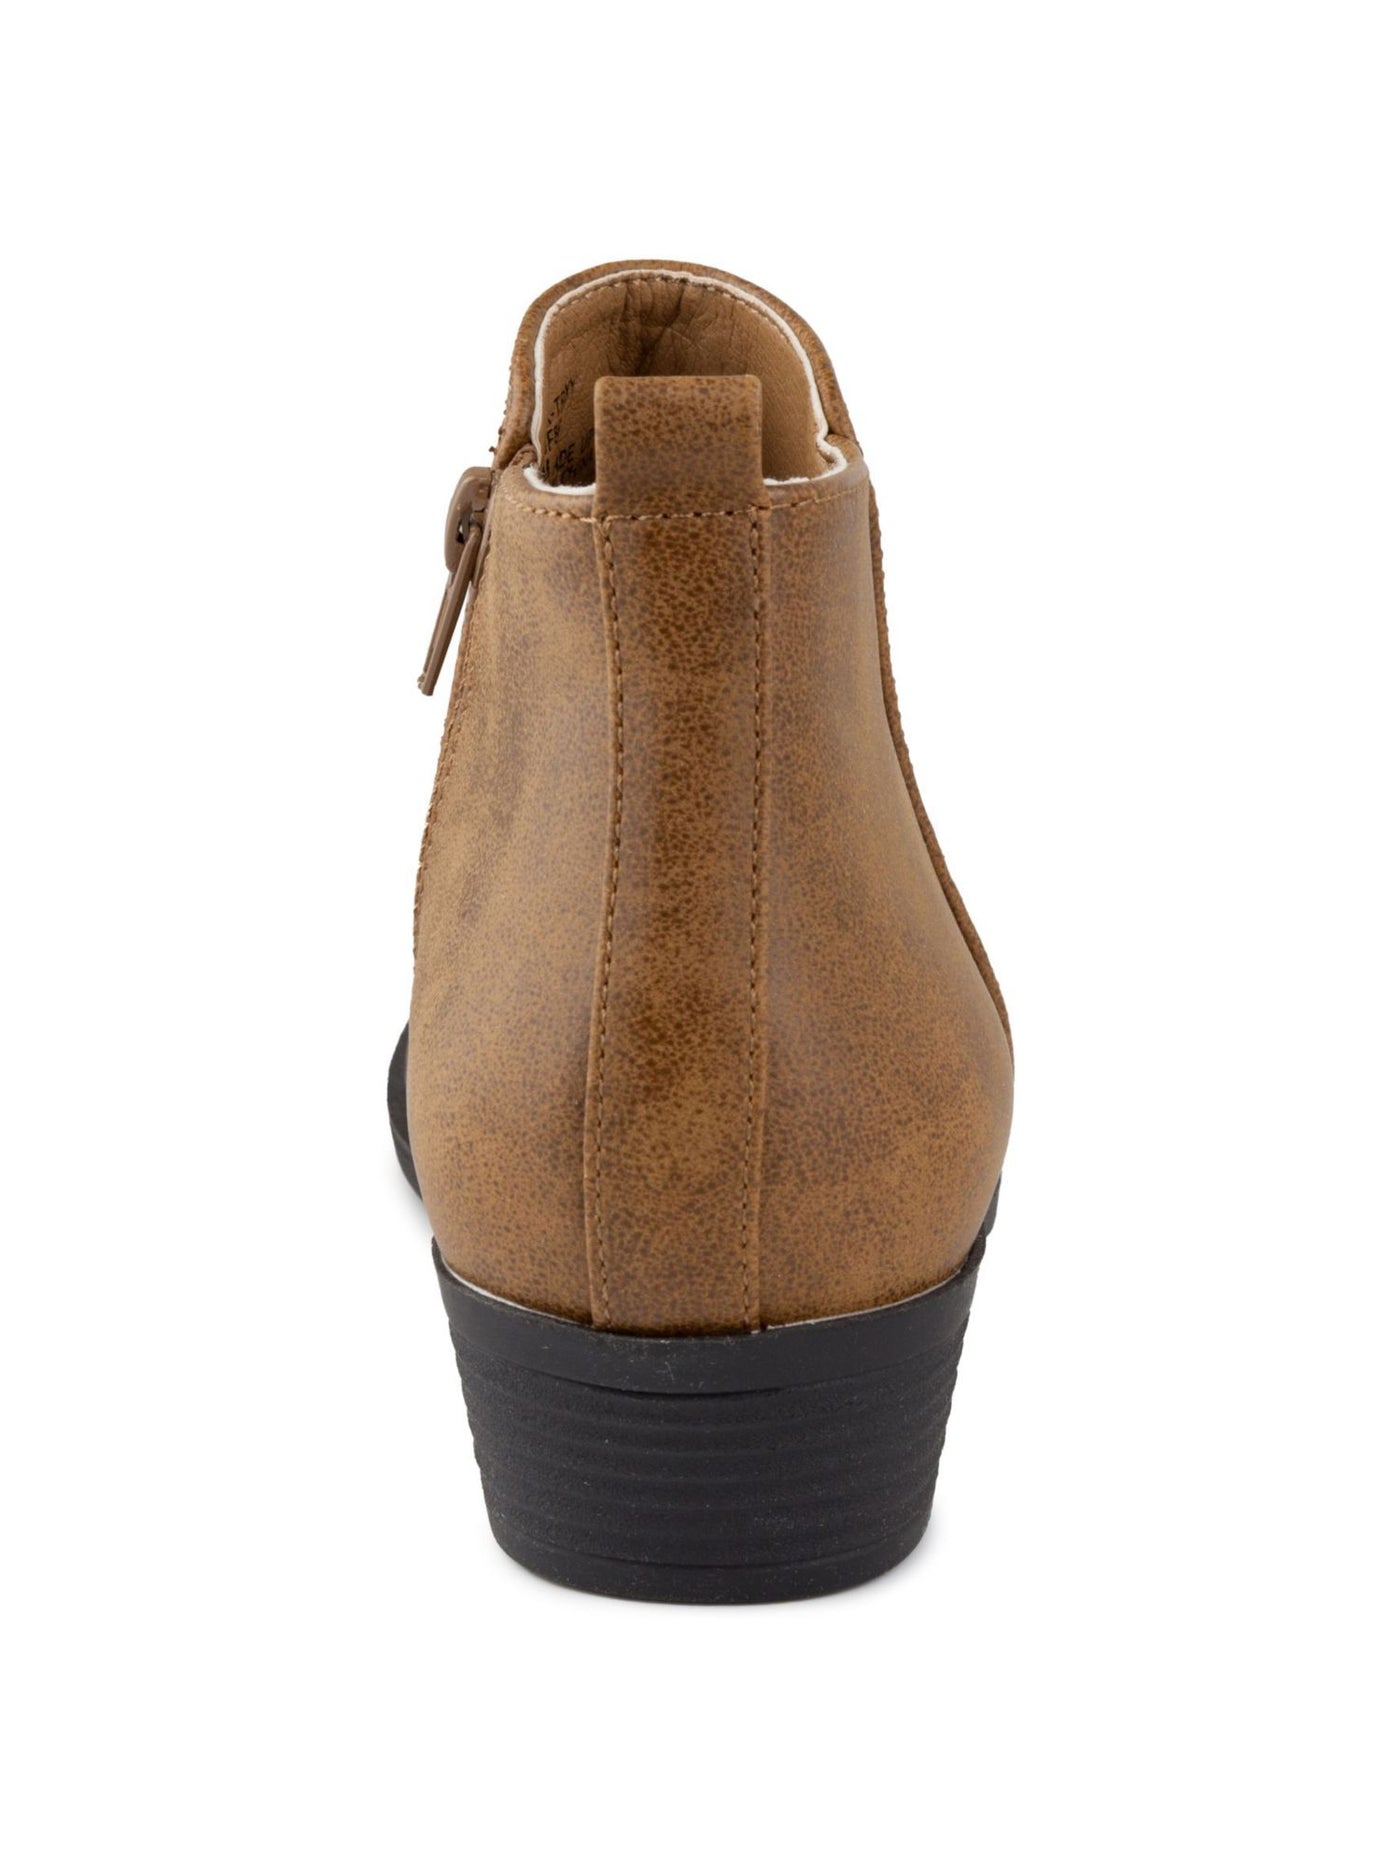 SUGAR Womens Brown Comfort Padded Trixy Almond Toe Block Heel Zip-Up Booties 8 M